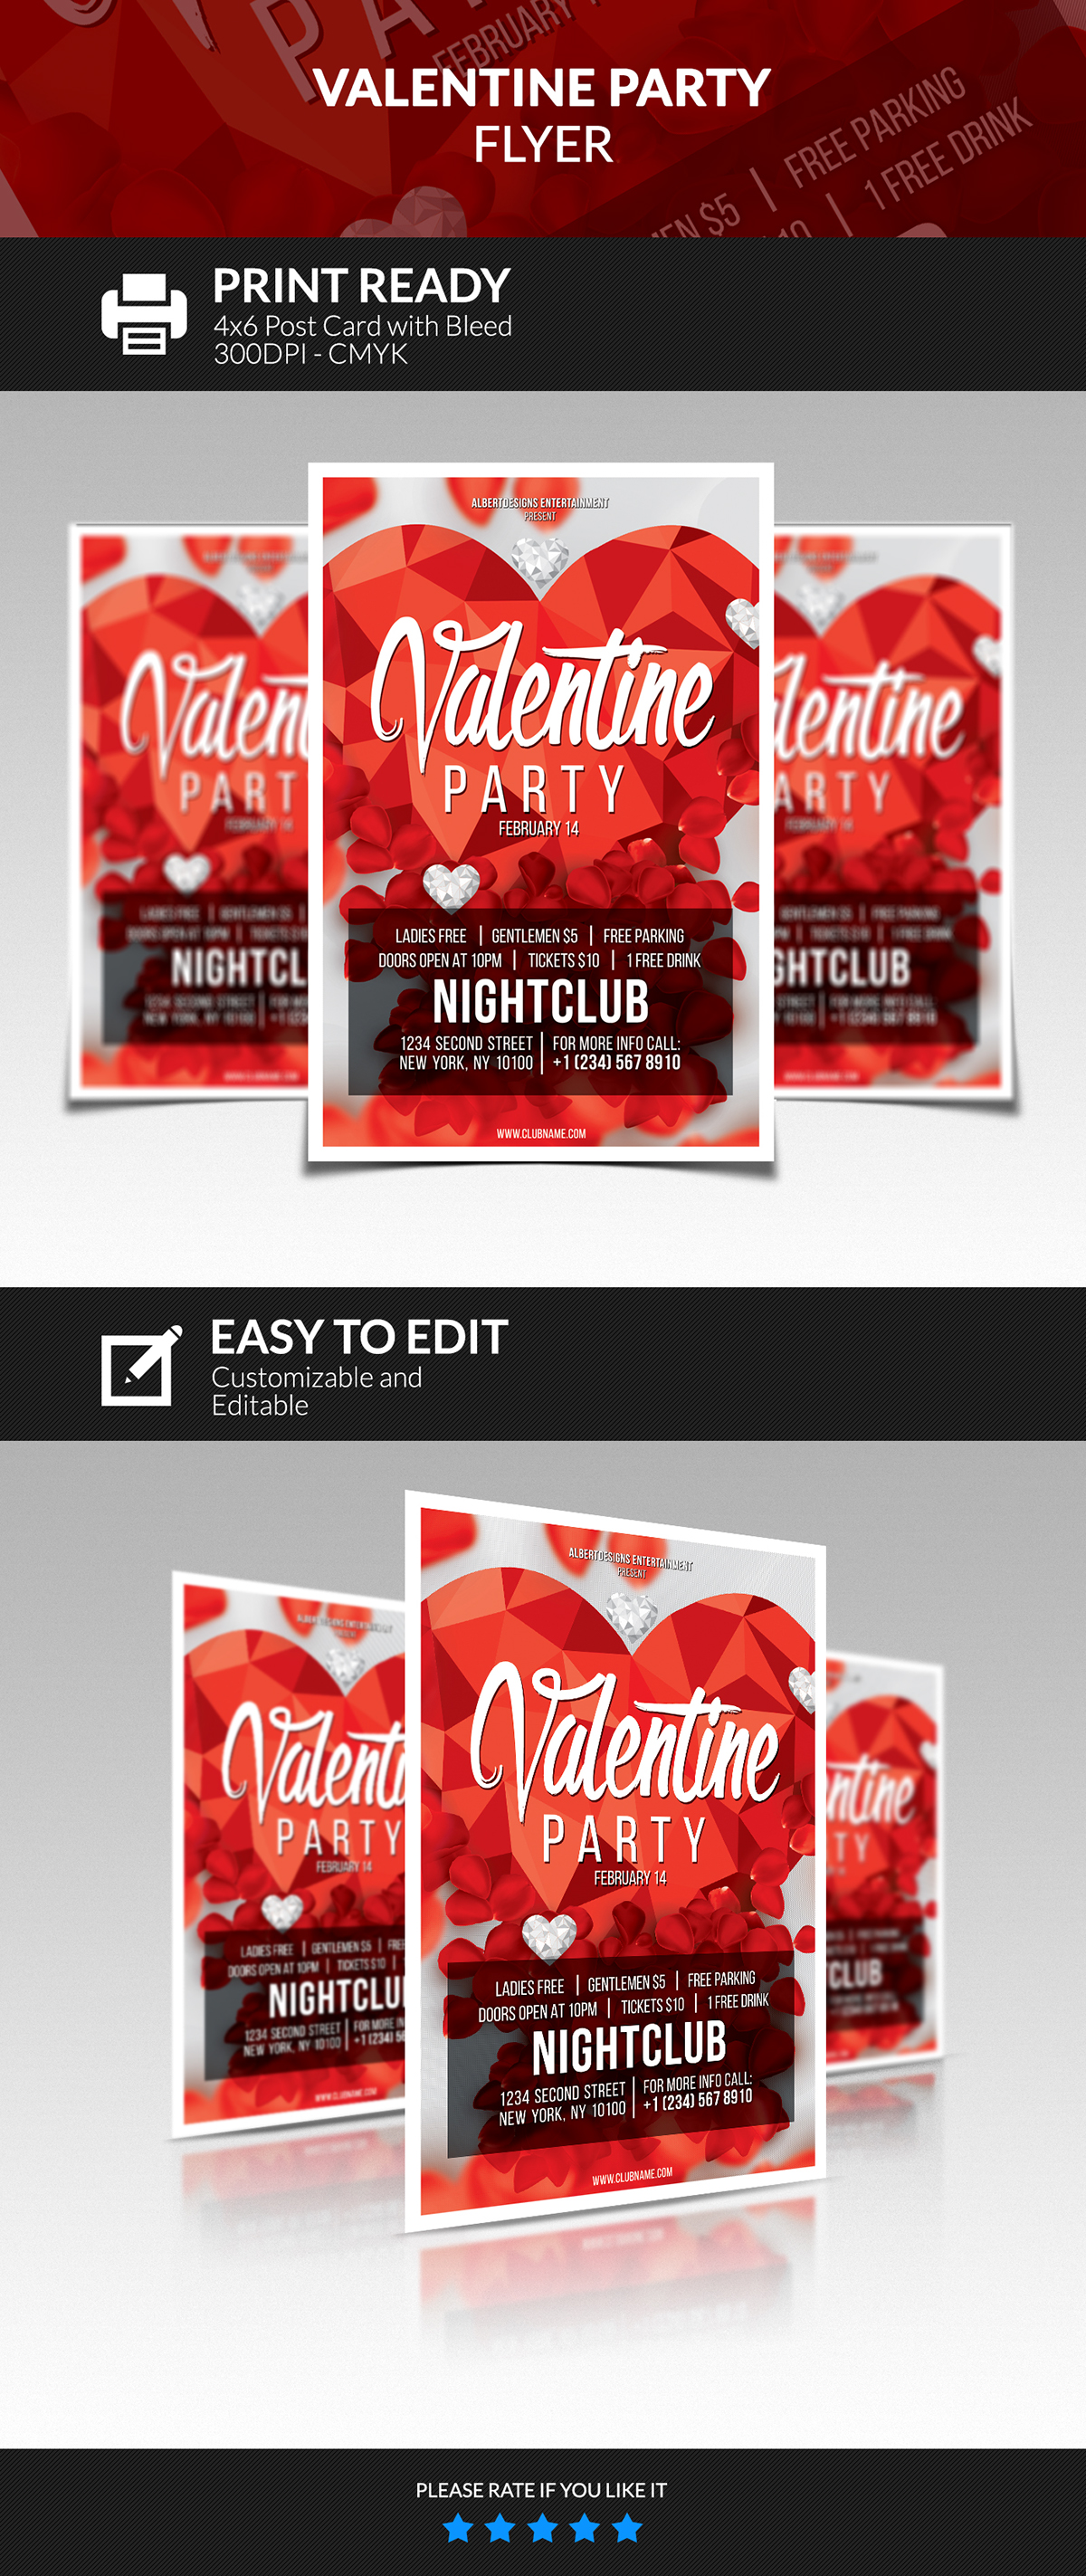 juandiazpro flyer valentine Love graphicdesign graphic design photoshop template graphicriver red heart